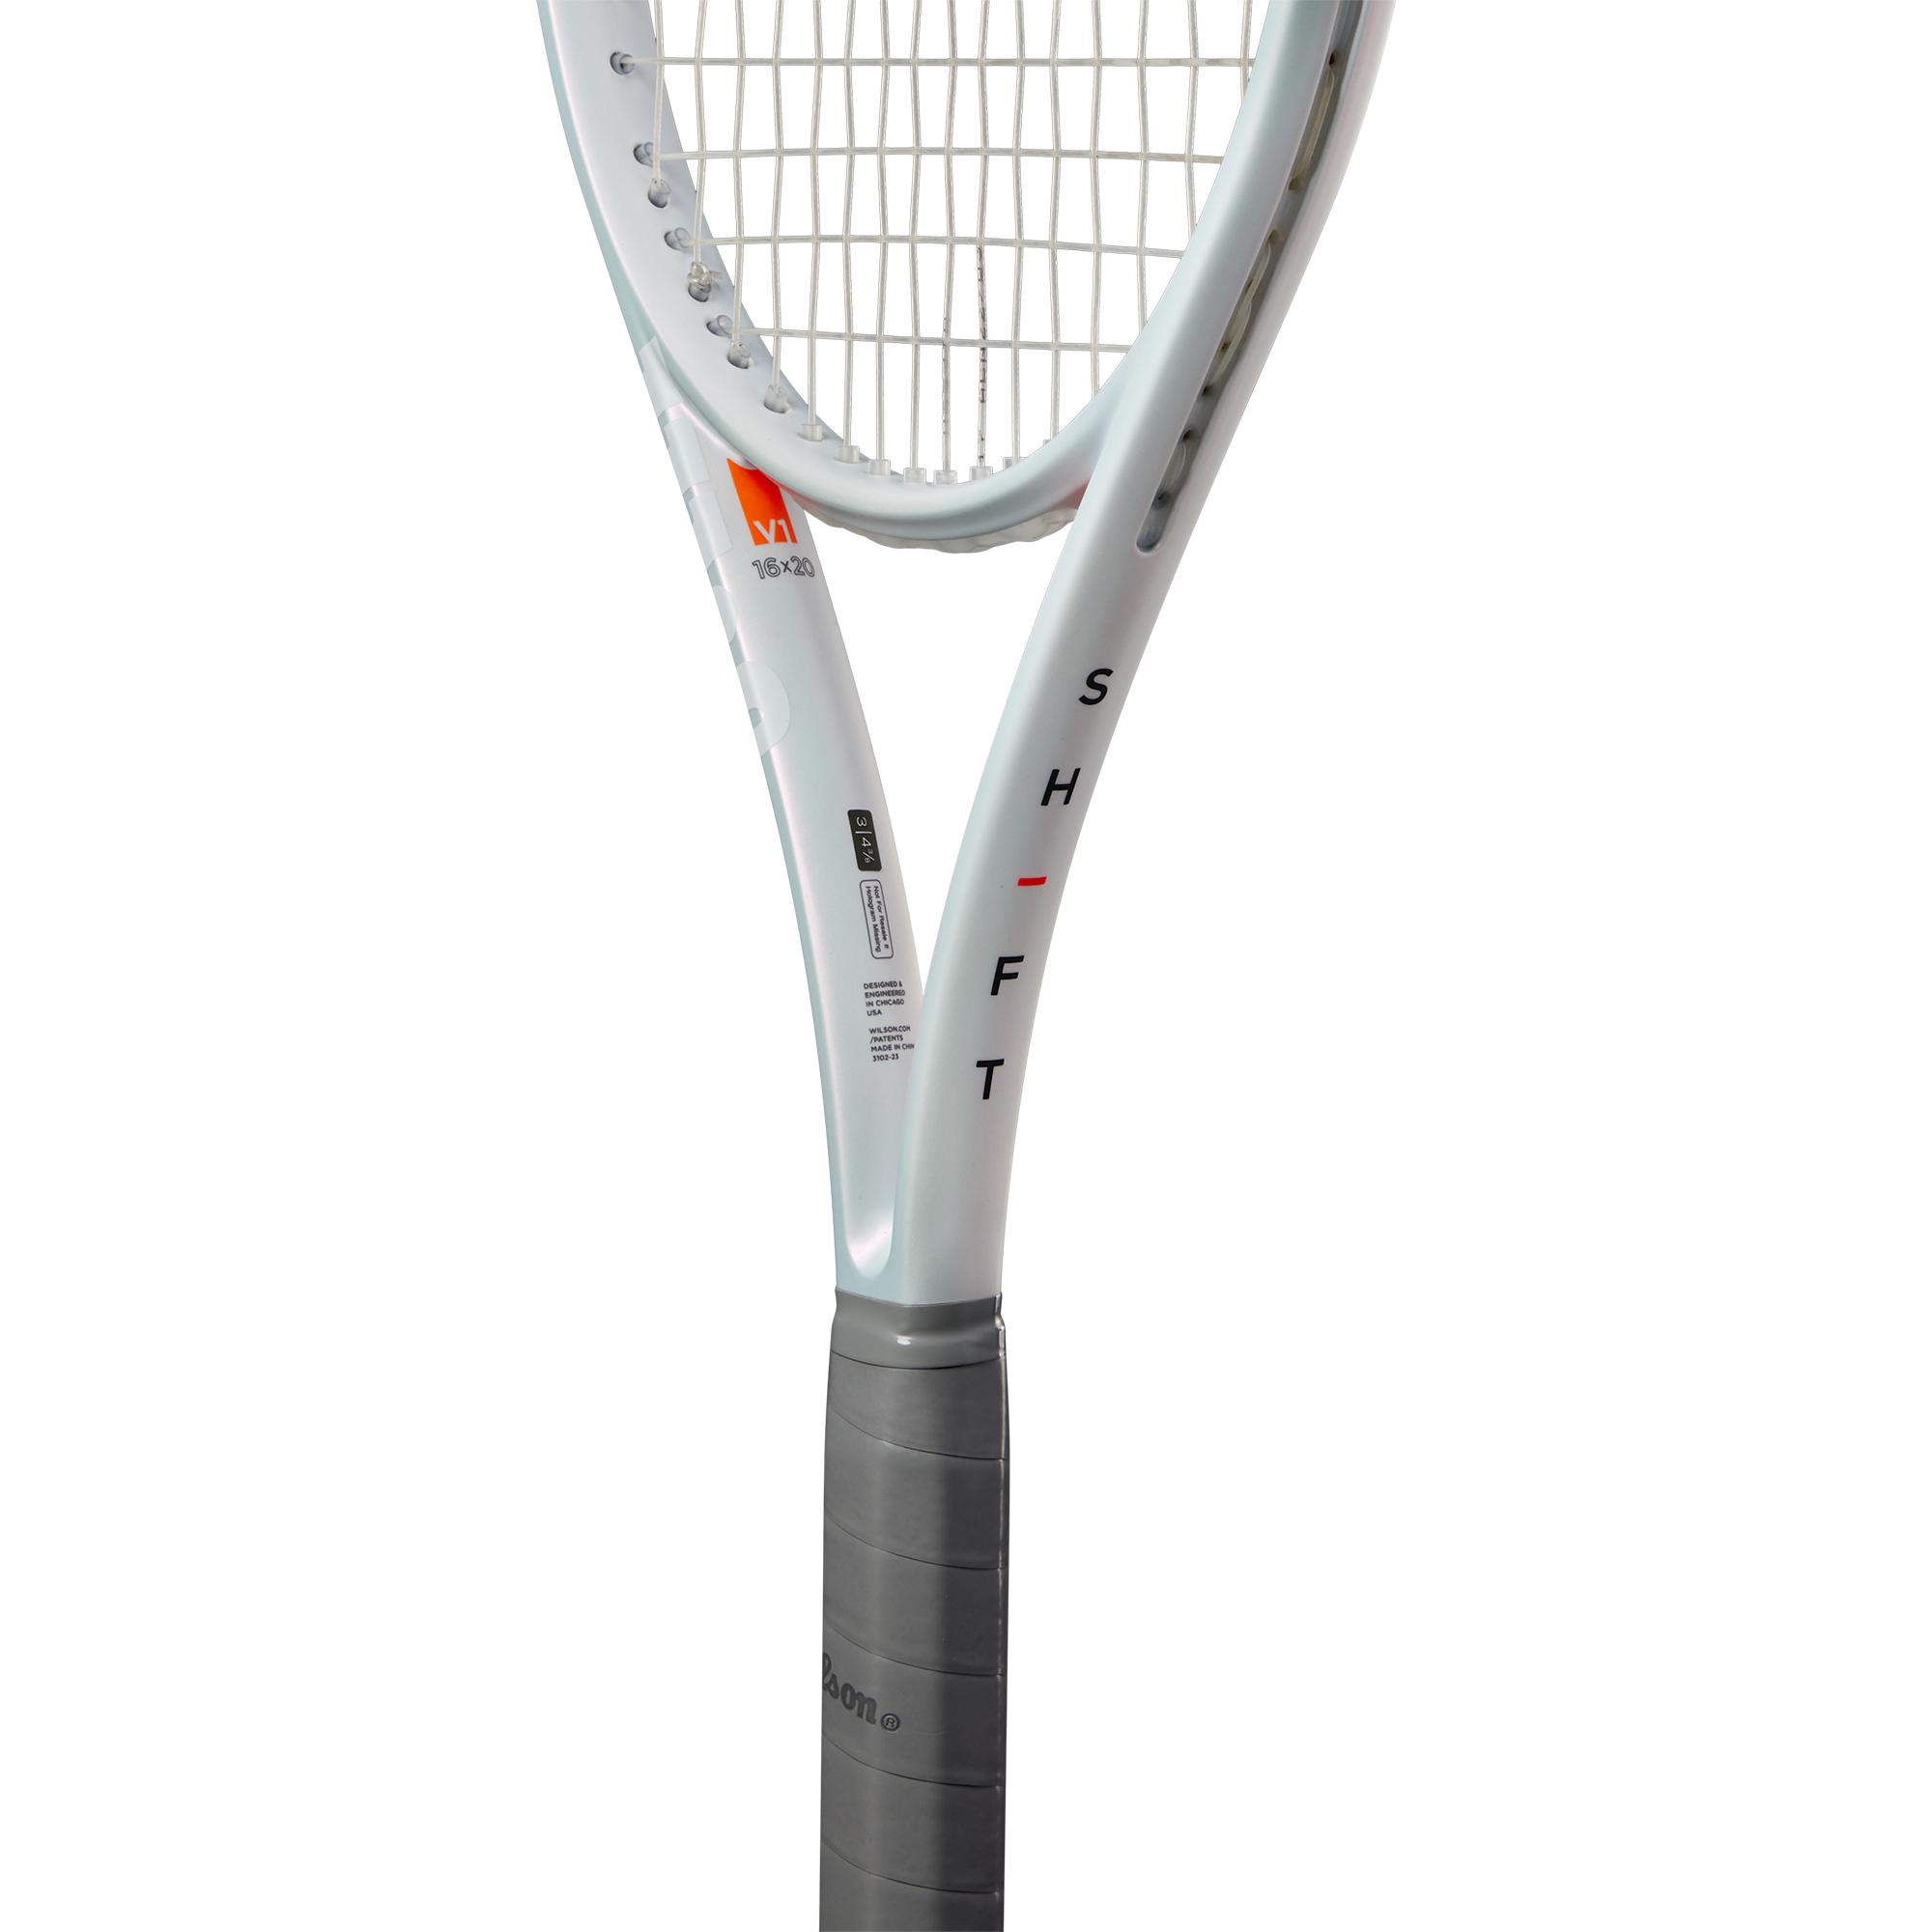 WILSON Shift 99 V1 Tennis Racket